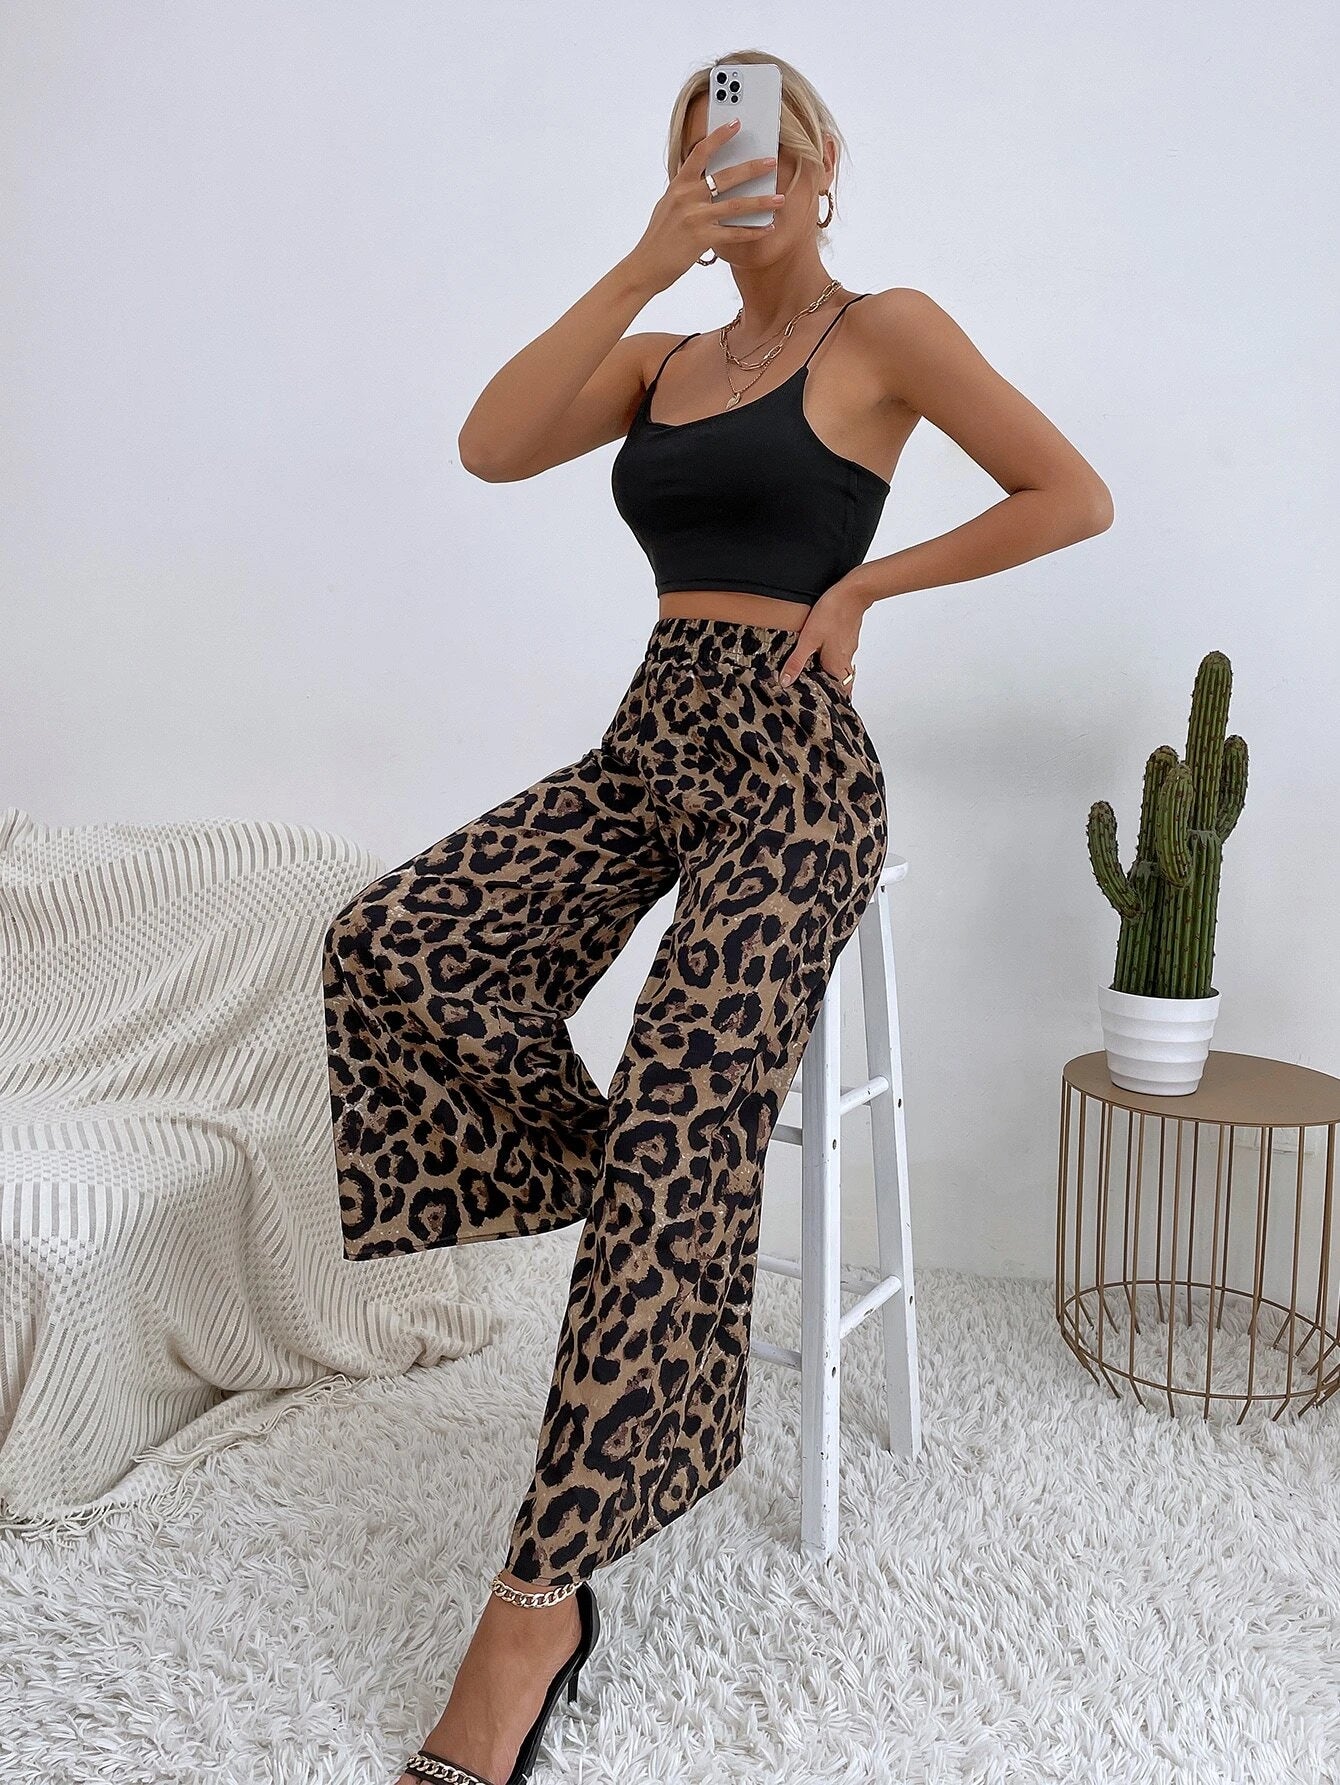 SHEIN VCAY Leopard Print Wide Leg Pants